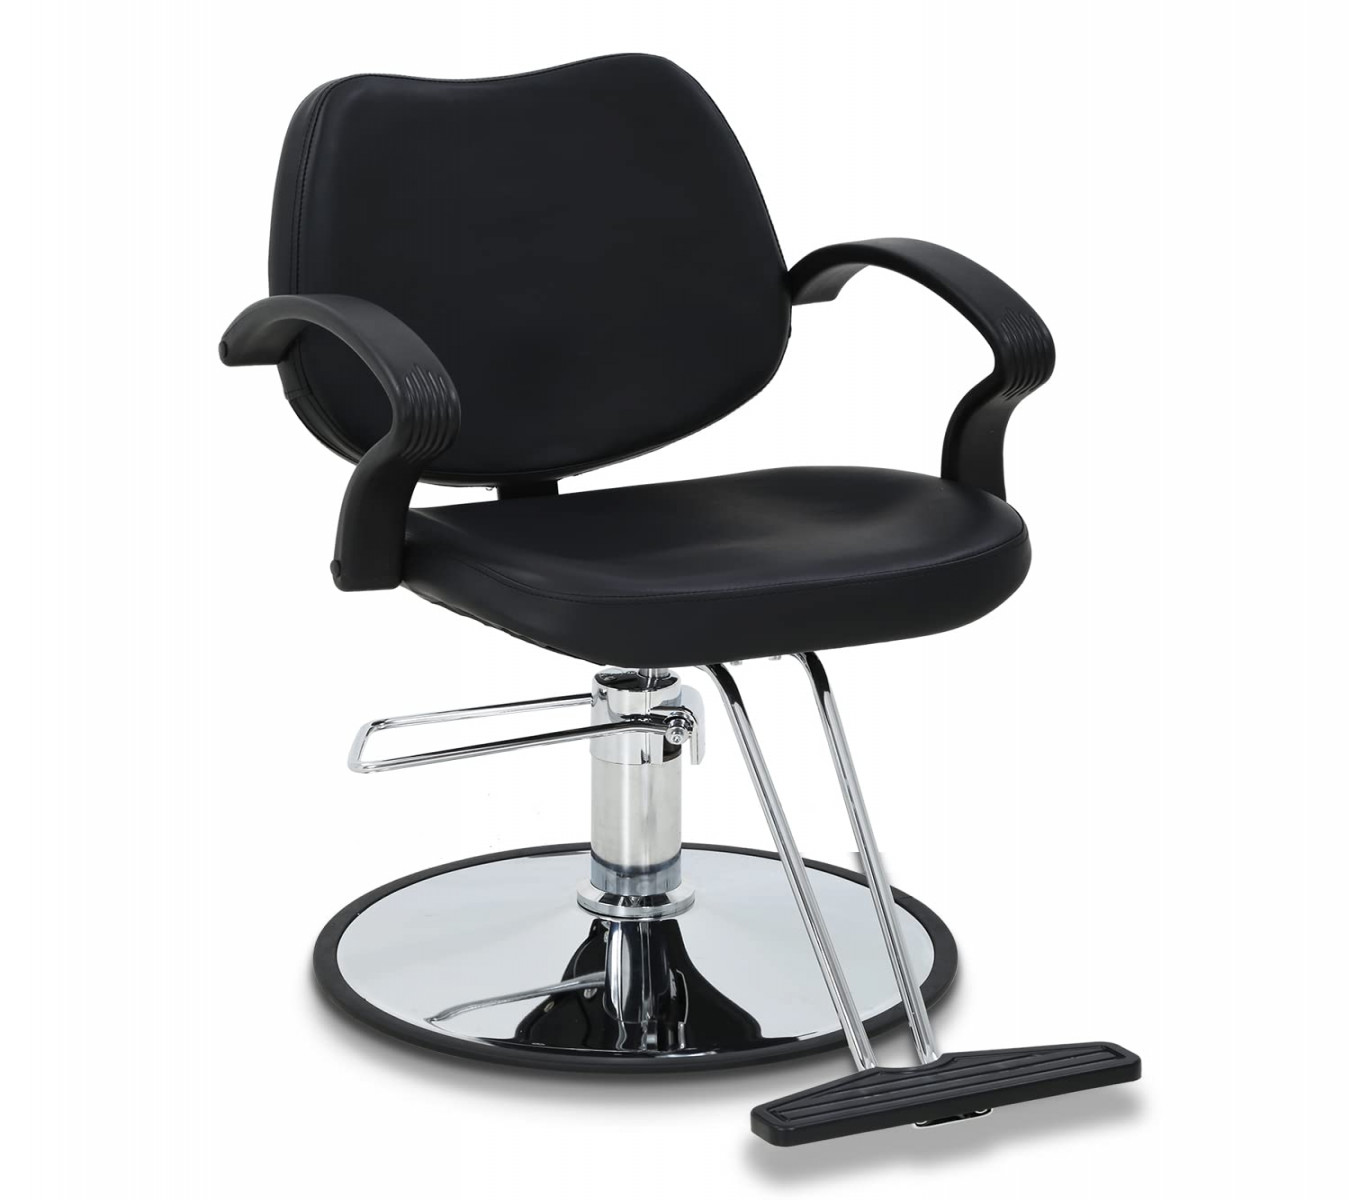 Dkeli Salon Chair Barber Chair Styling Chair Hydraulic Heavy Duty Leather  Swivel Classic Hair Salon Chair Shampoo Tattoo Spa Beauty Equipment for  Hair Stylist Women Man,Black